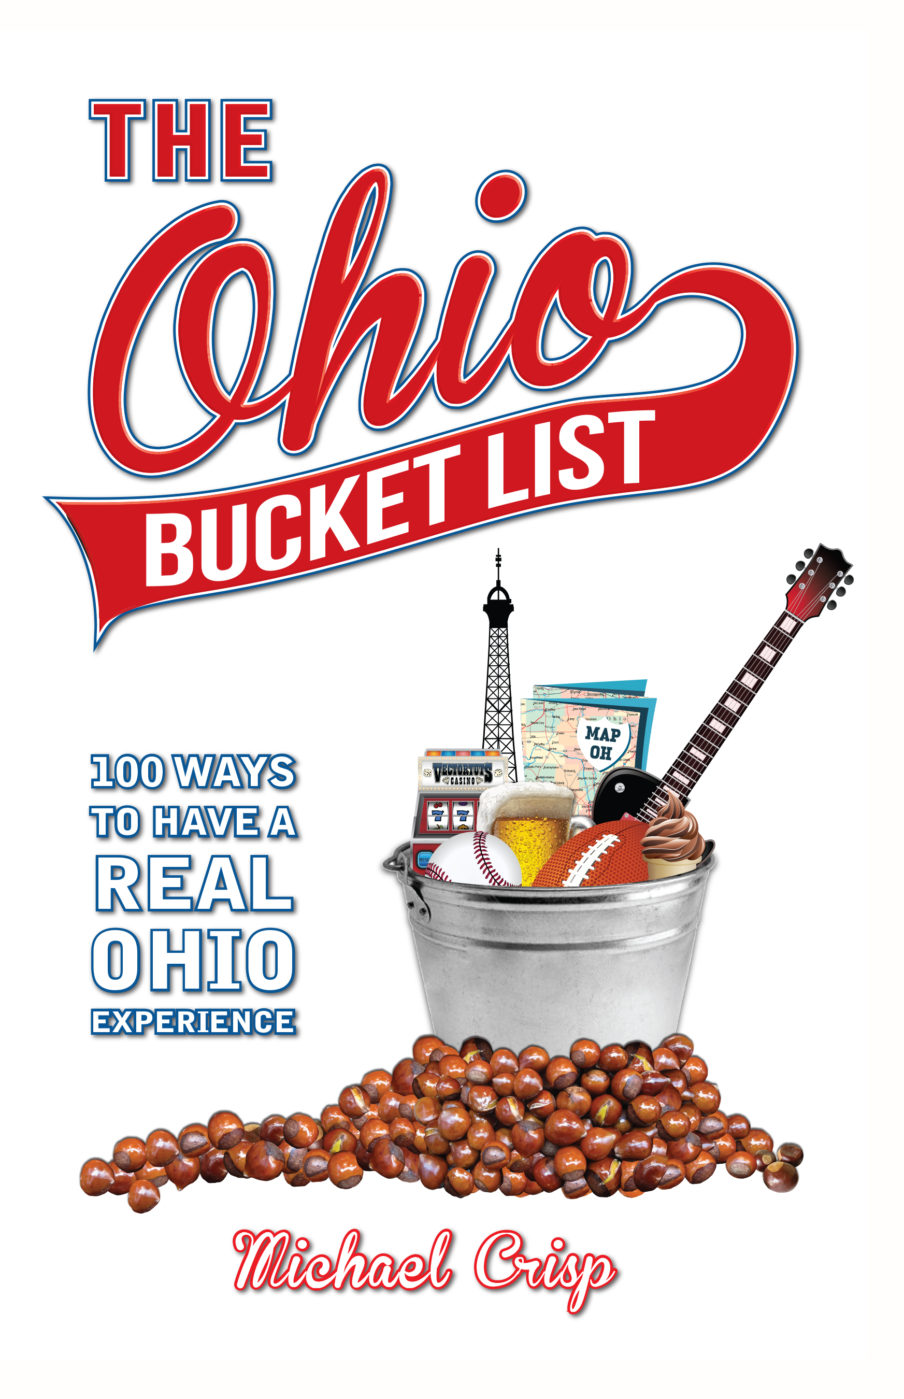 Ohio Bucket List